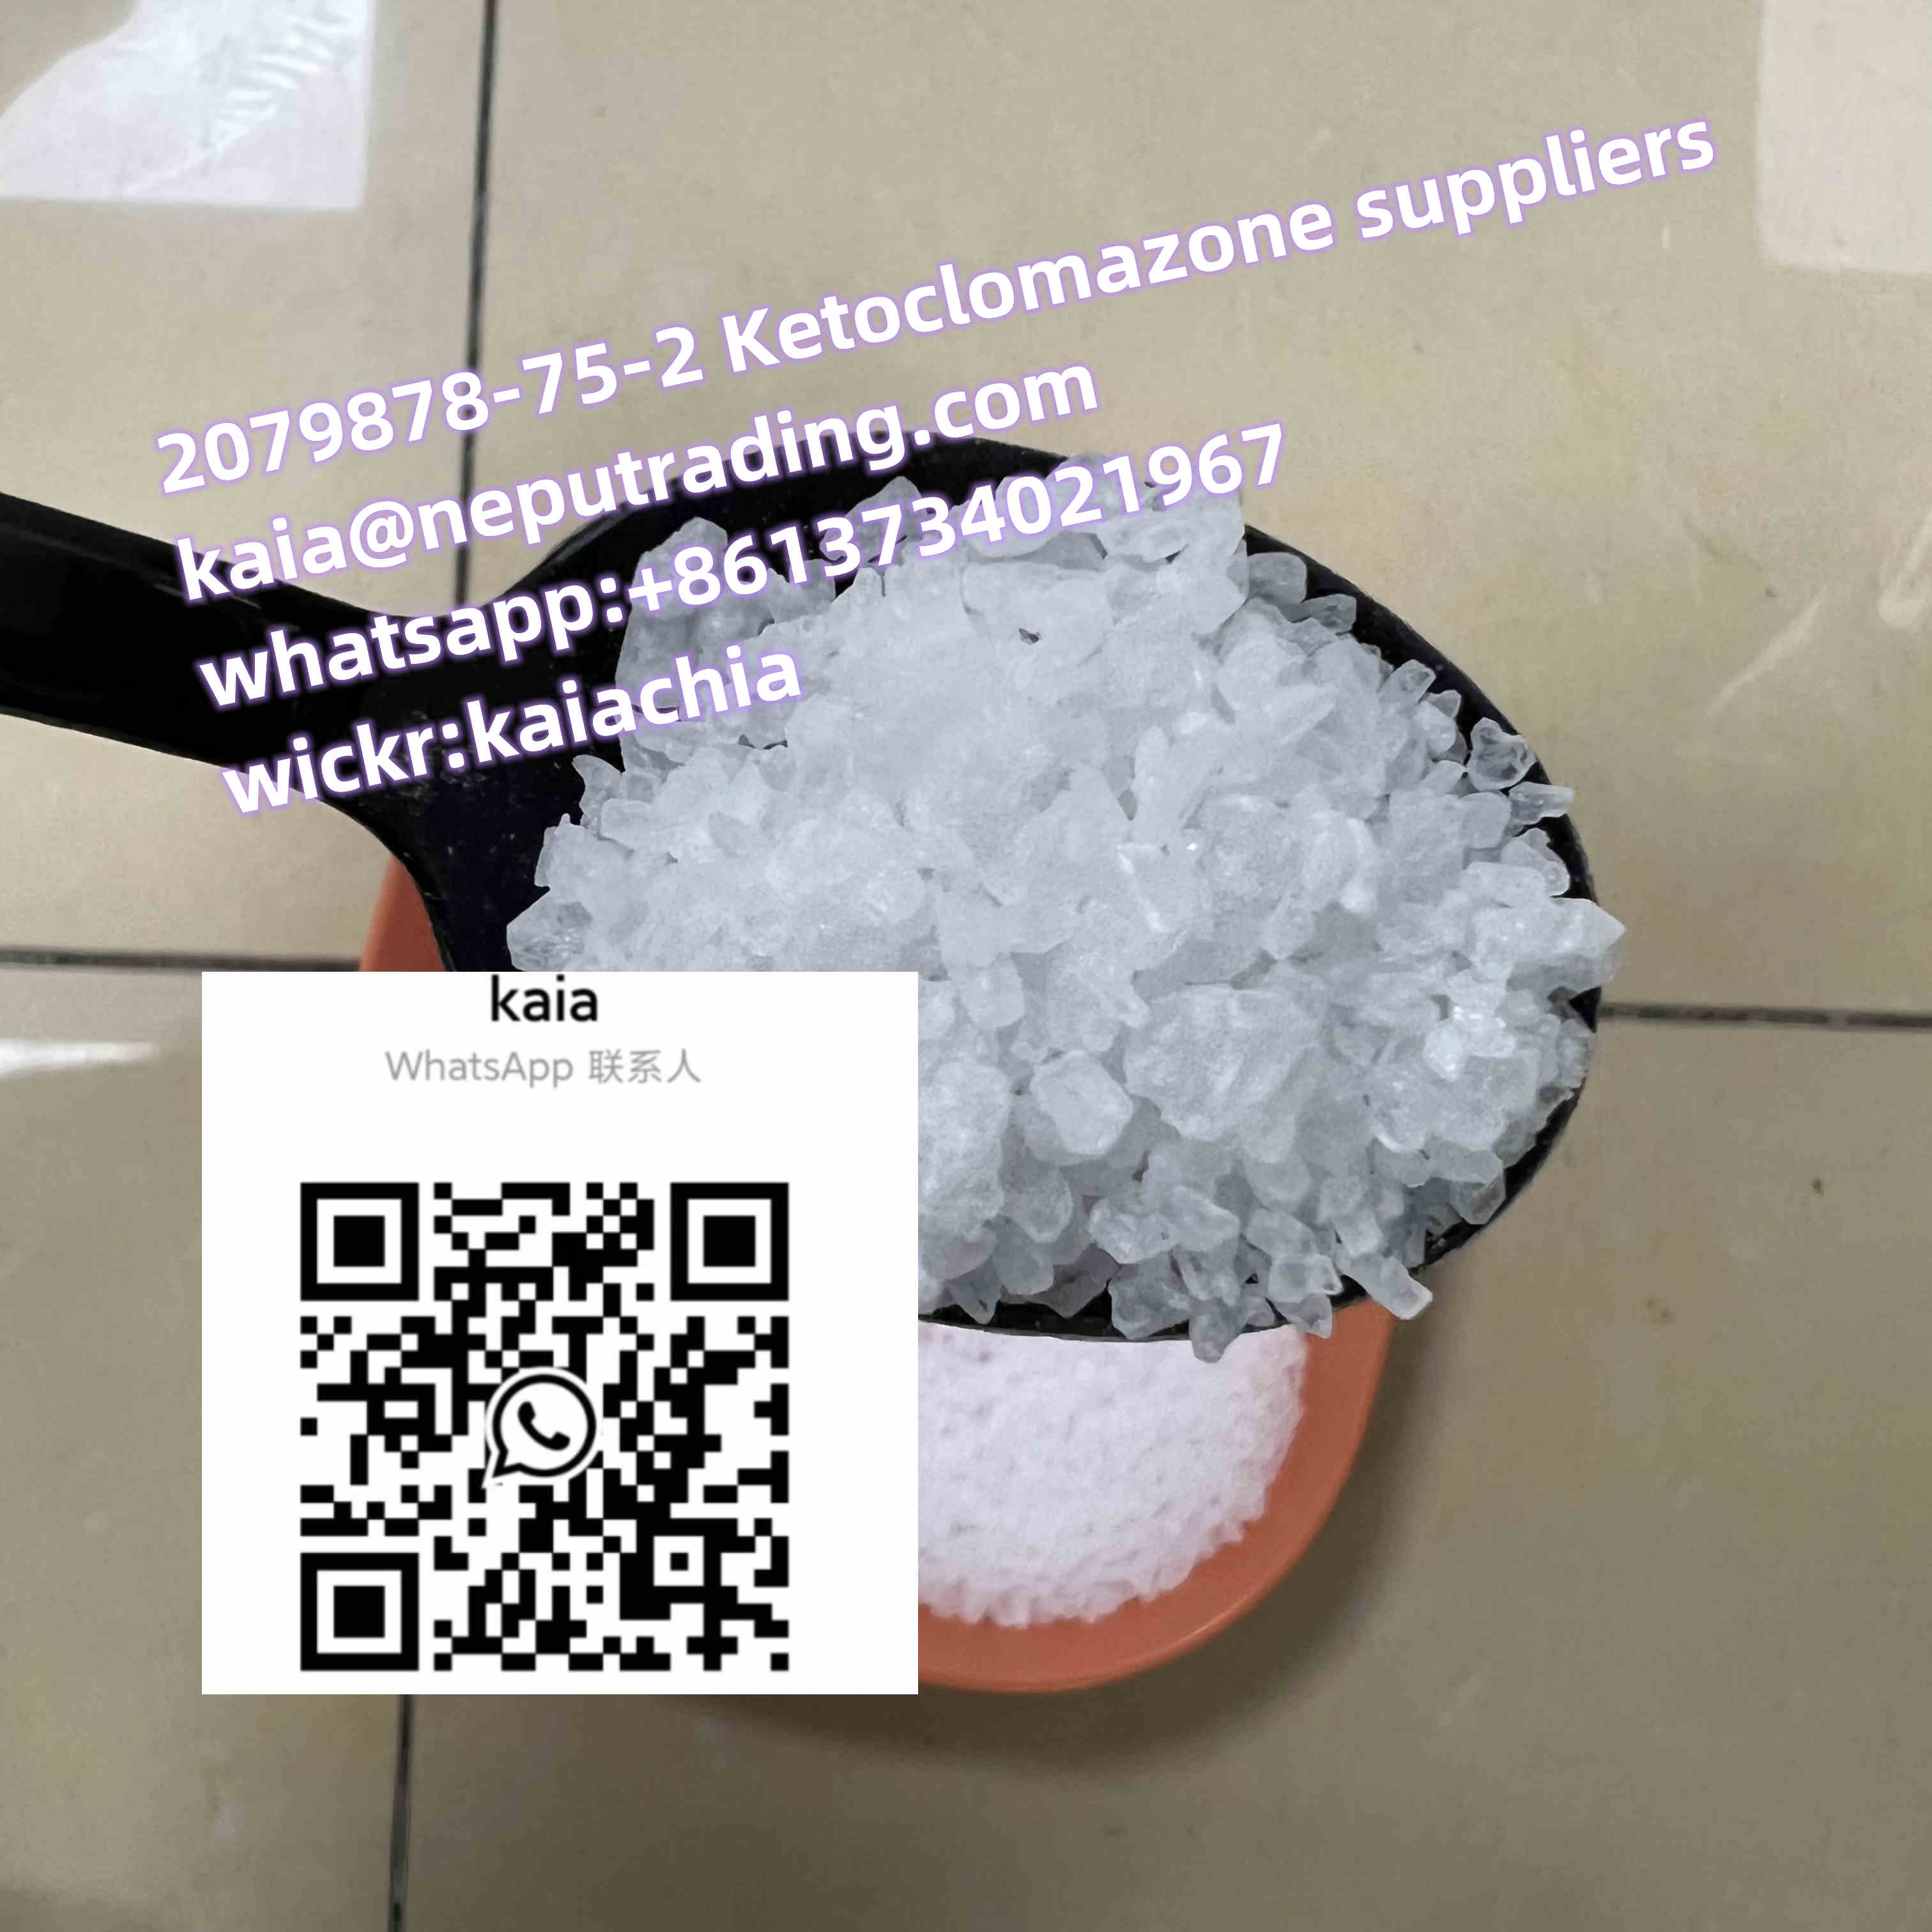 2079878-75-2/ Ketoclomazone crystals